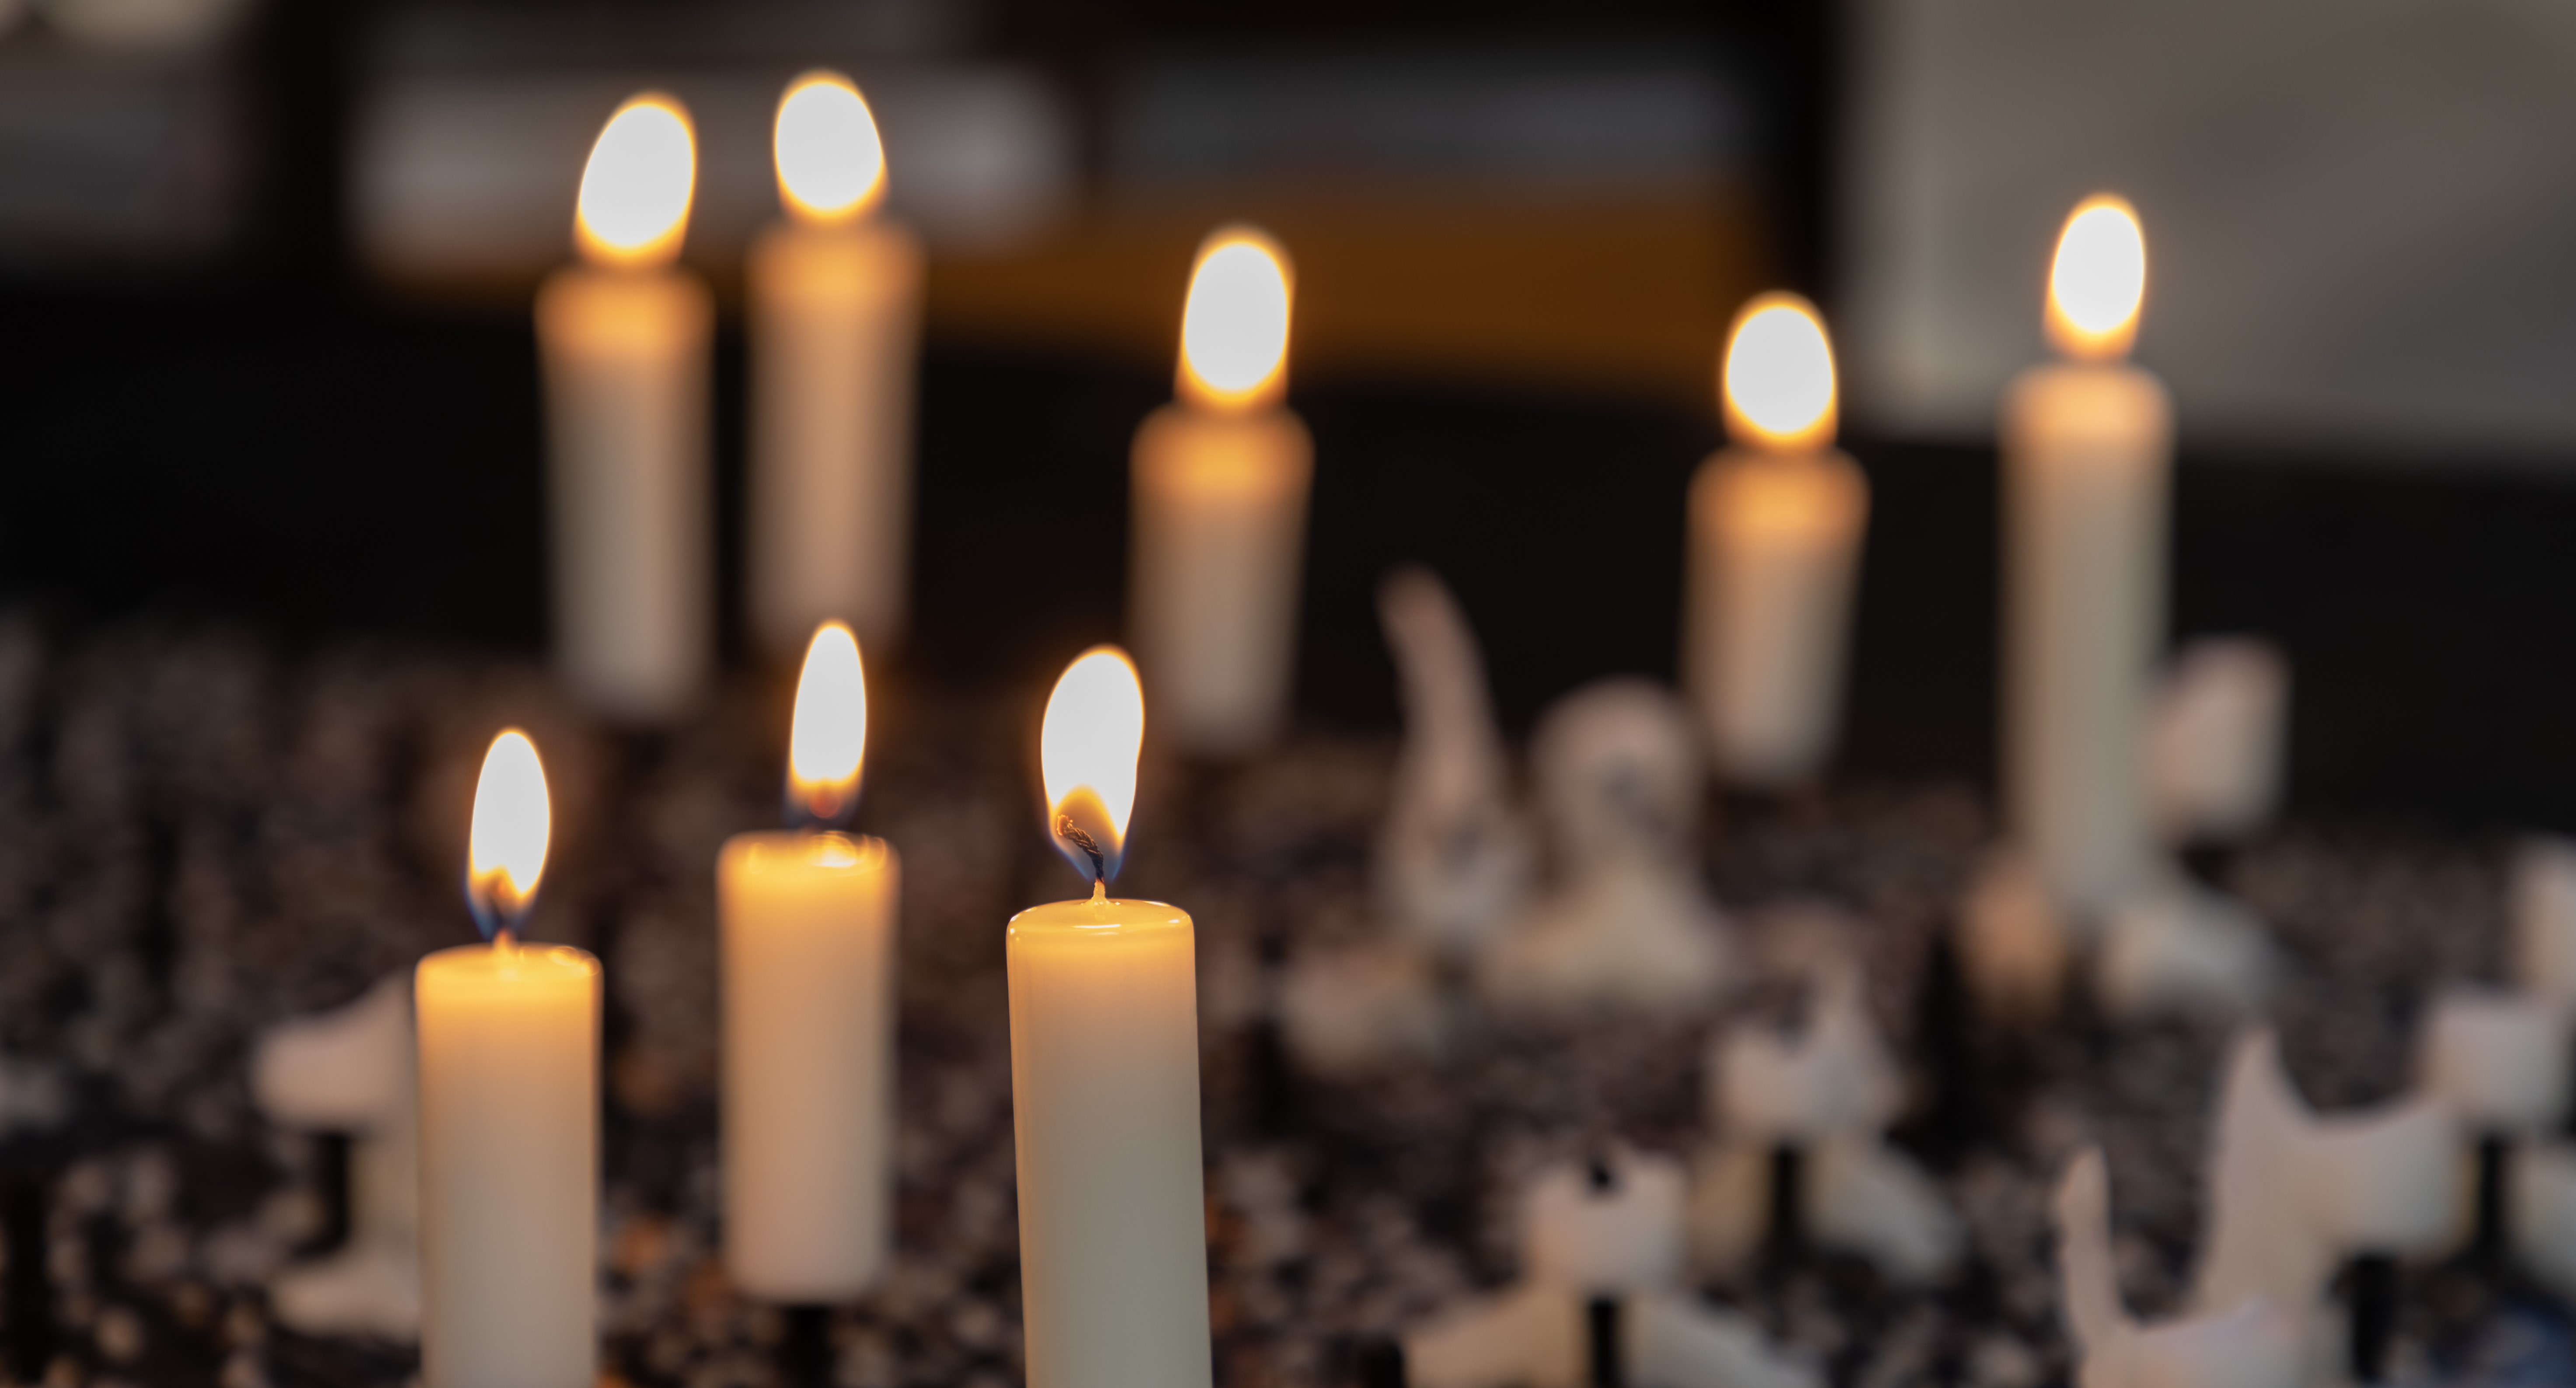 Candles in church crop2